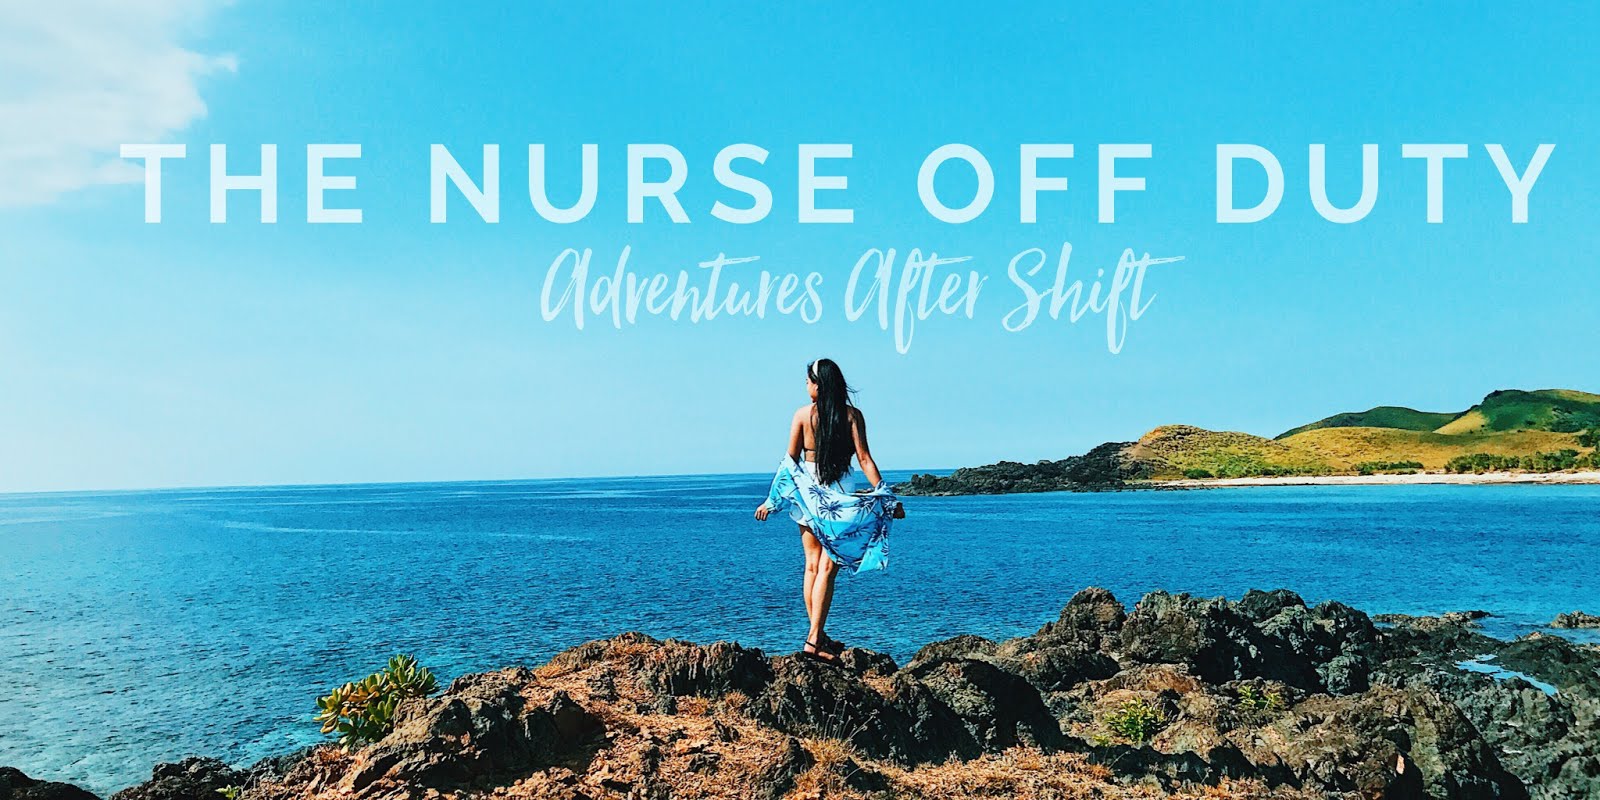 The Nurse Off Duty by Joan Maniago